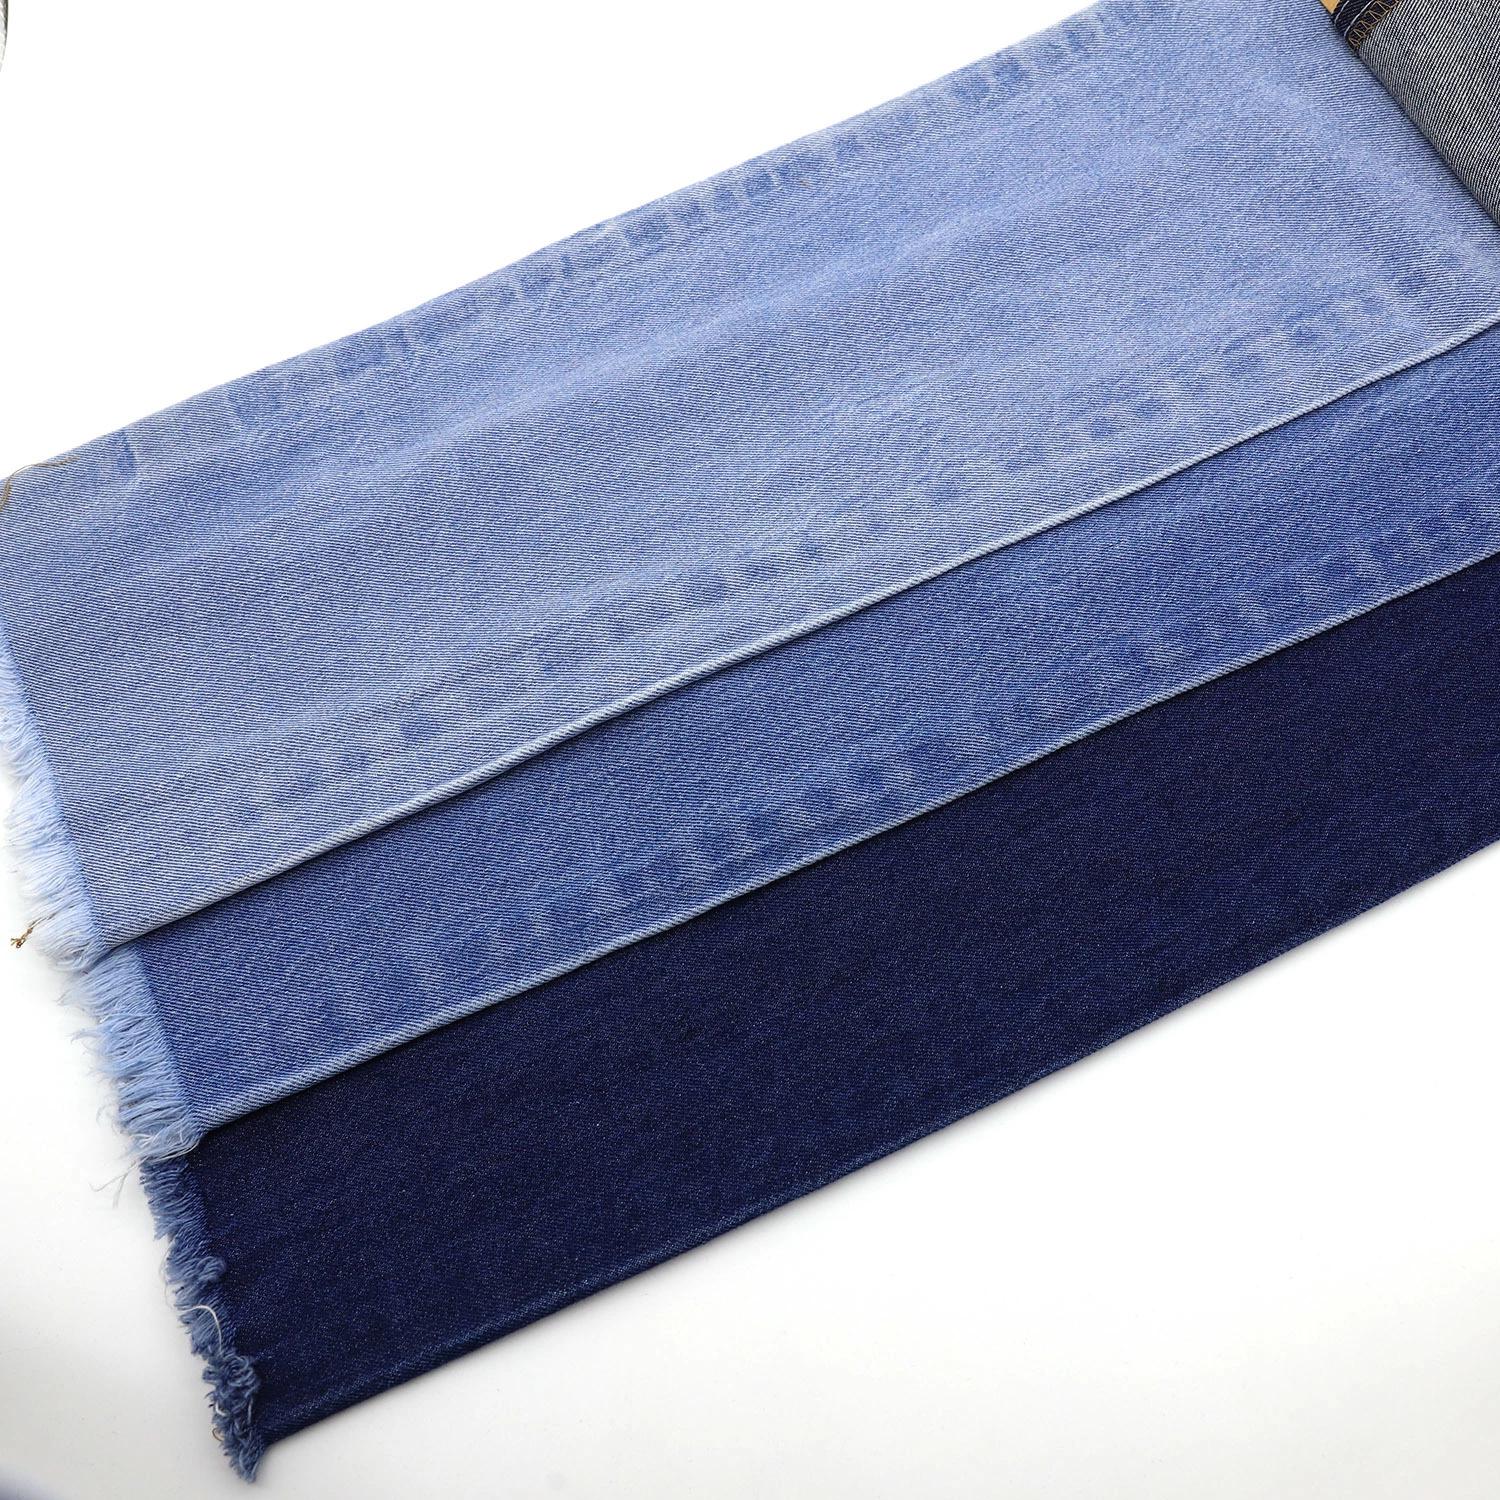 10oz 100% Cotton S200A-18 denim fabric non-stretchable